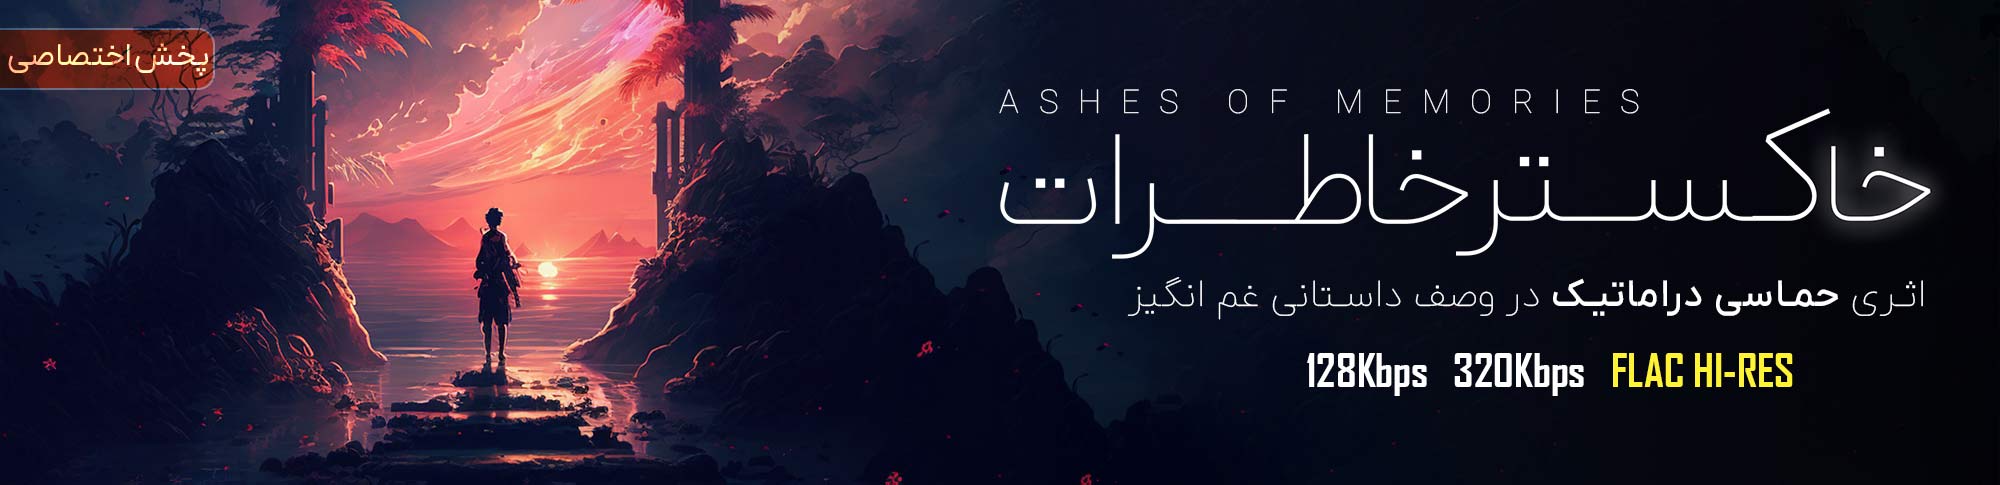 Ashes of Memories - Mohsen iLAT